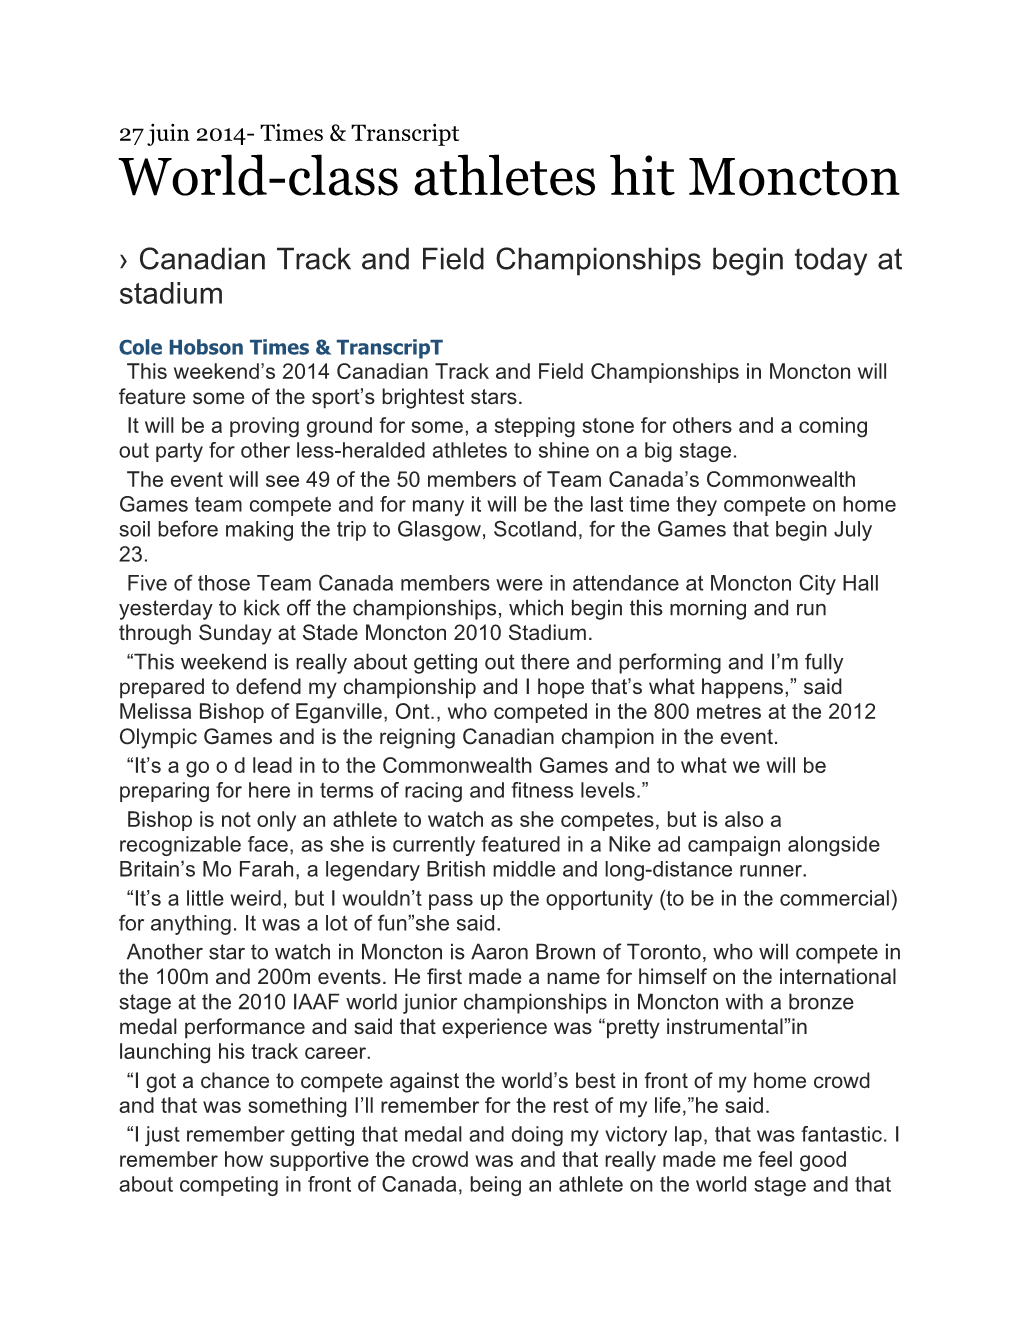 World-Class Athletes Hit Moncton